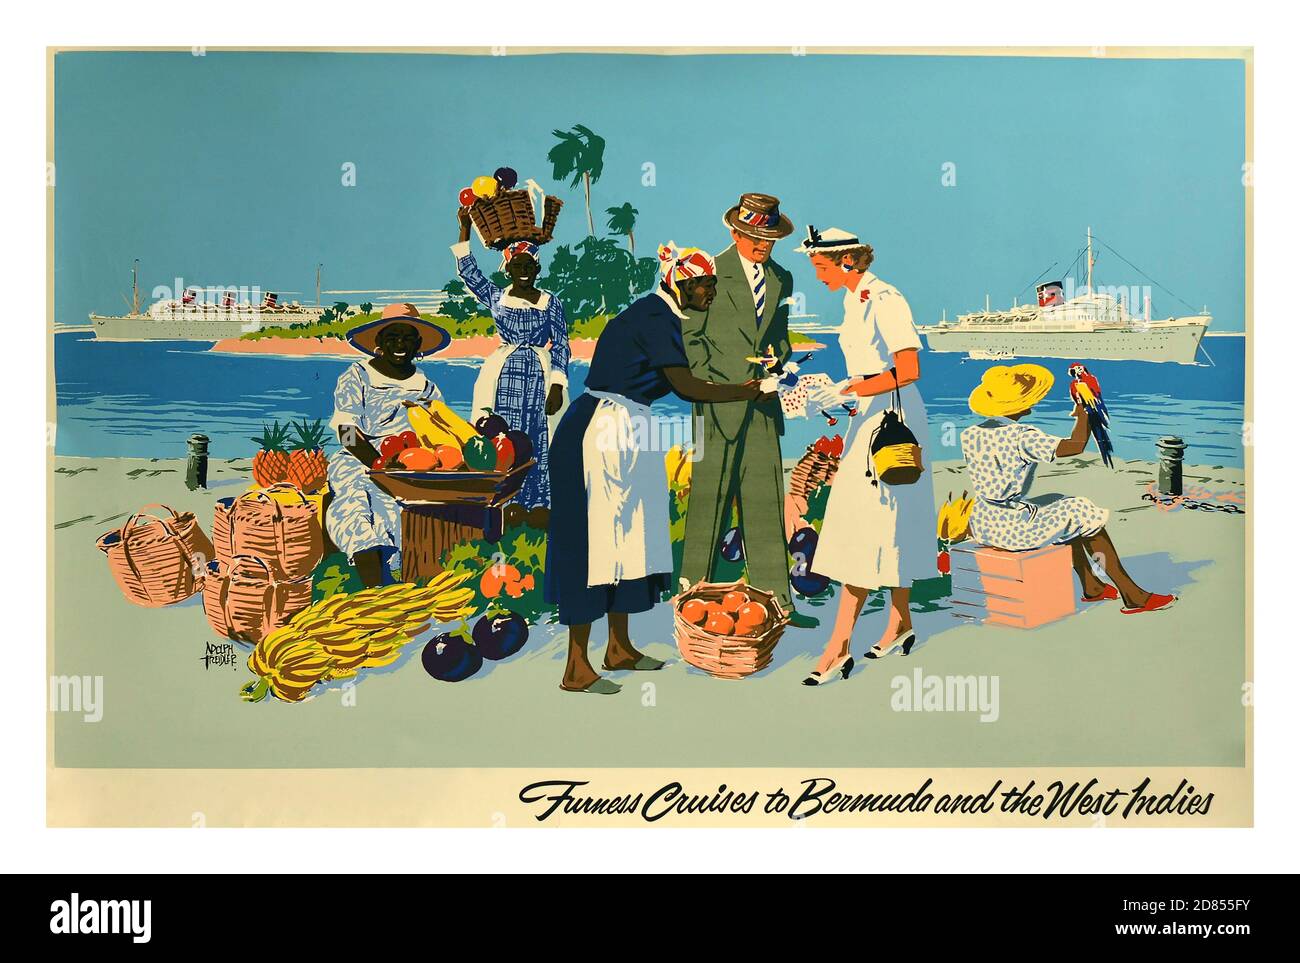 Bermuda Island Tours Empire Caribbean Vintage Travel Advertisement Art Poster 